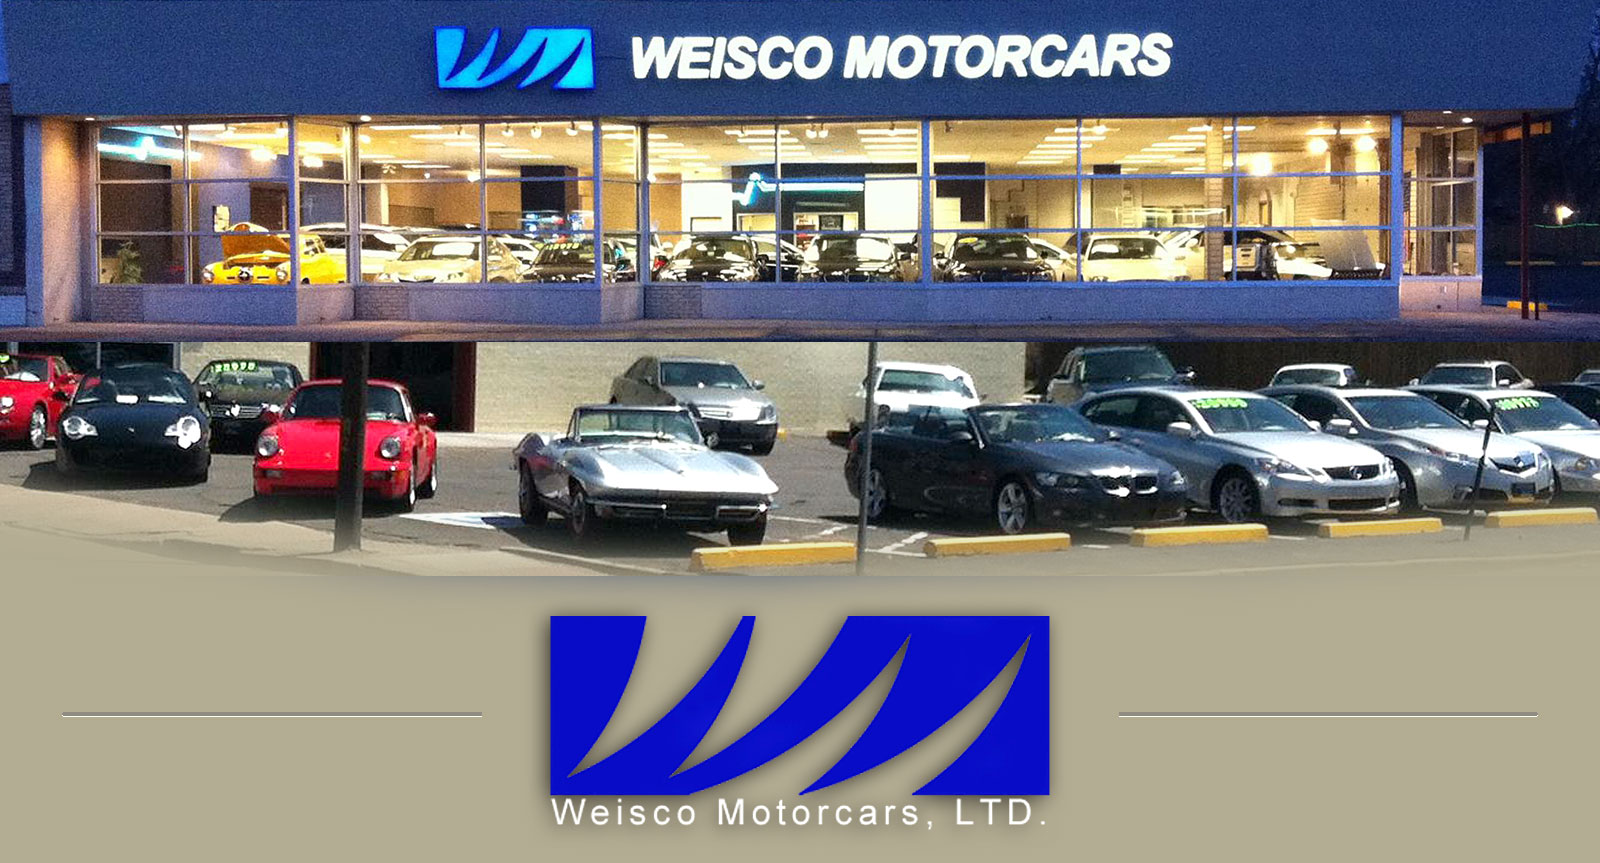 Weisco Motorcars